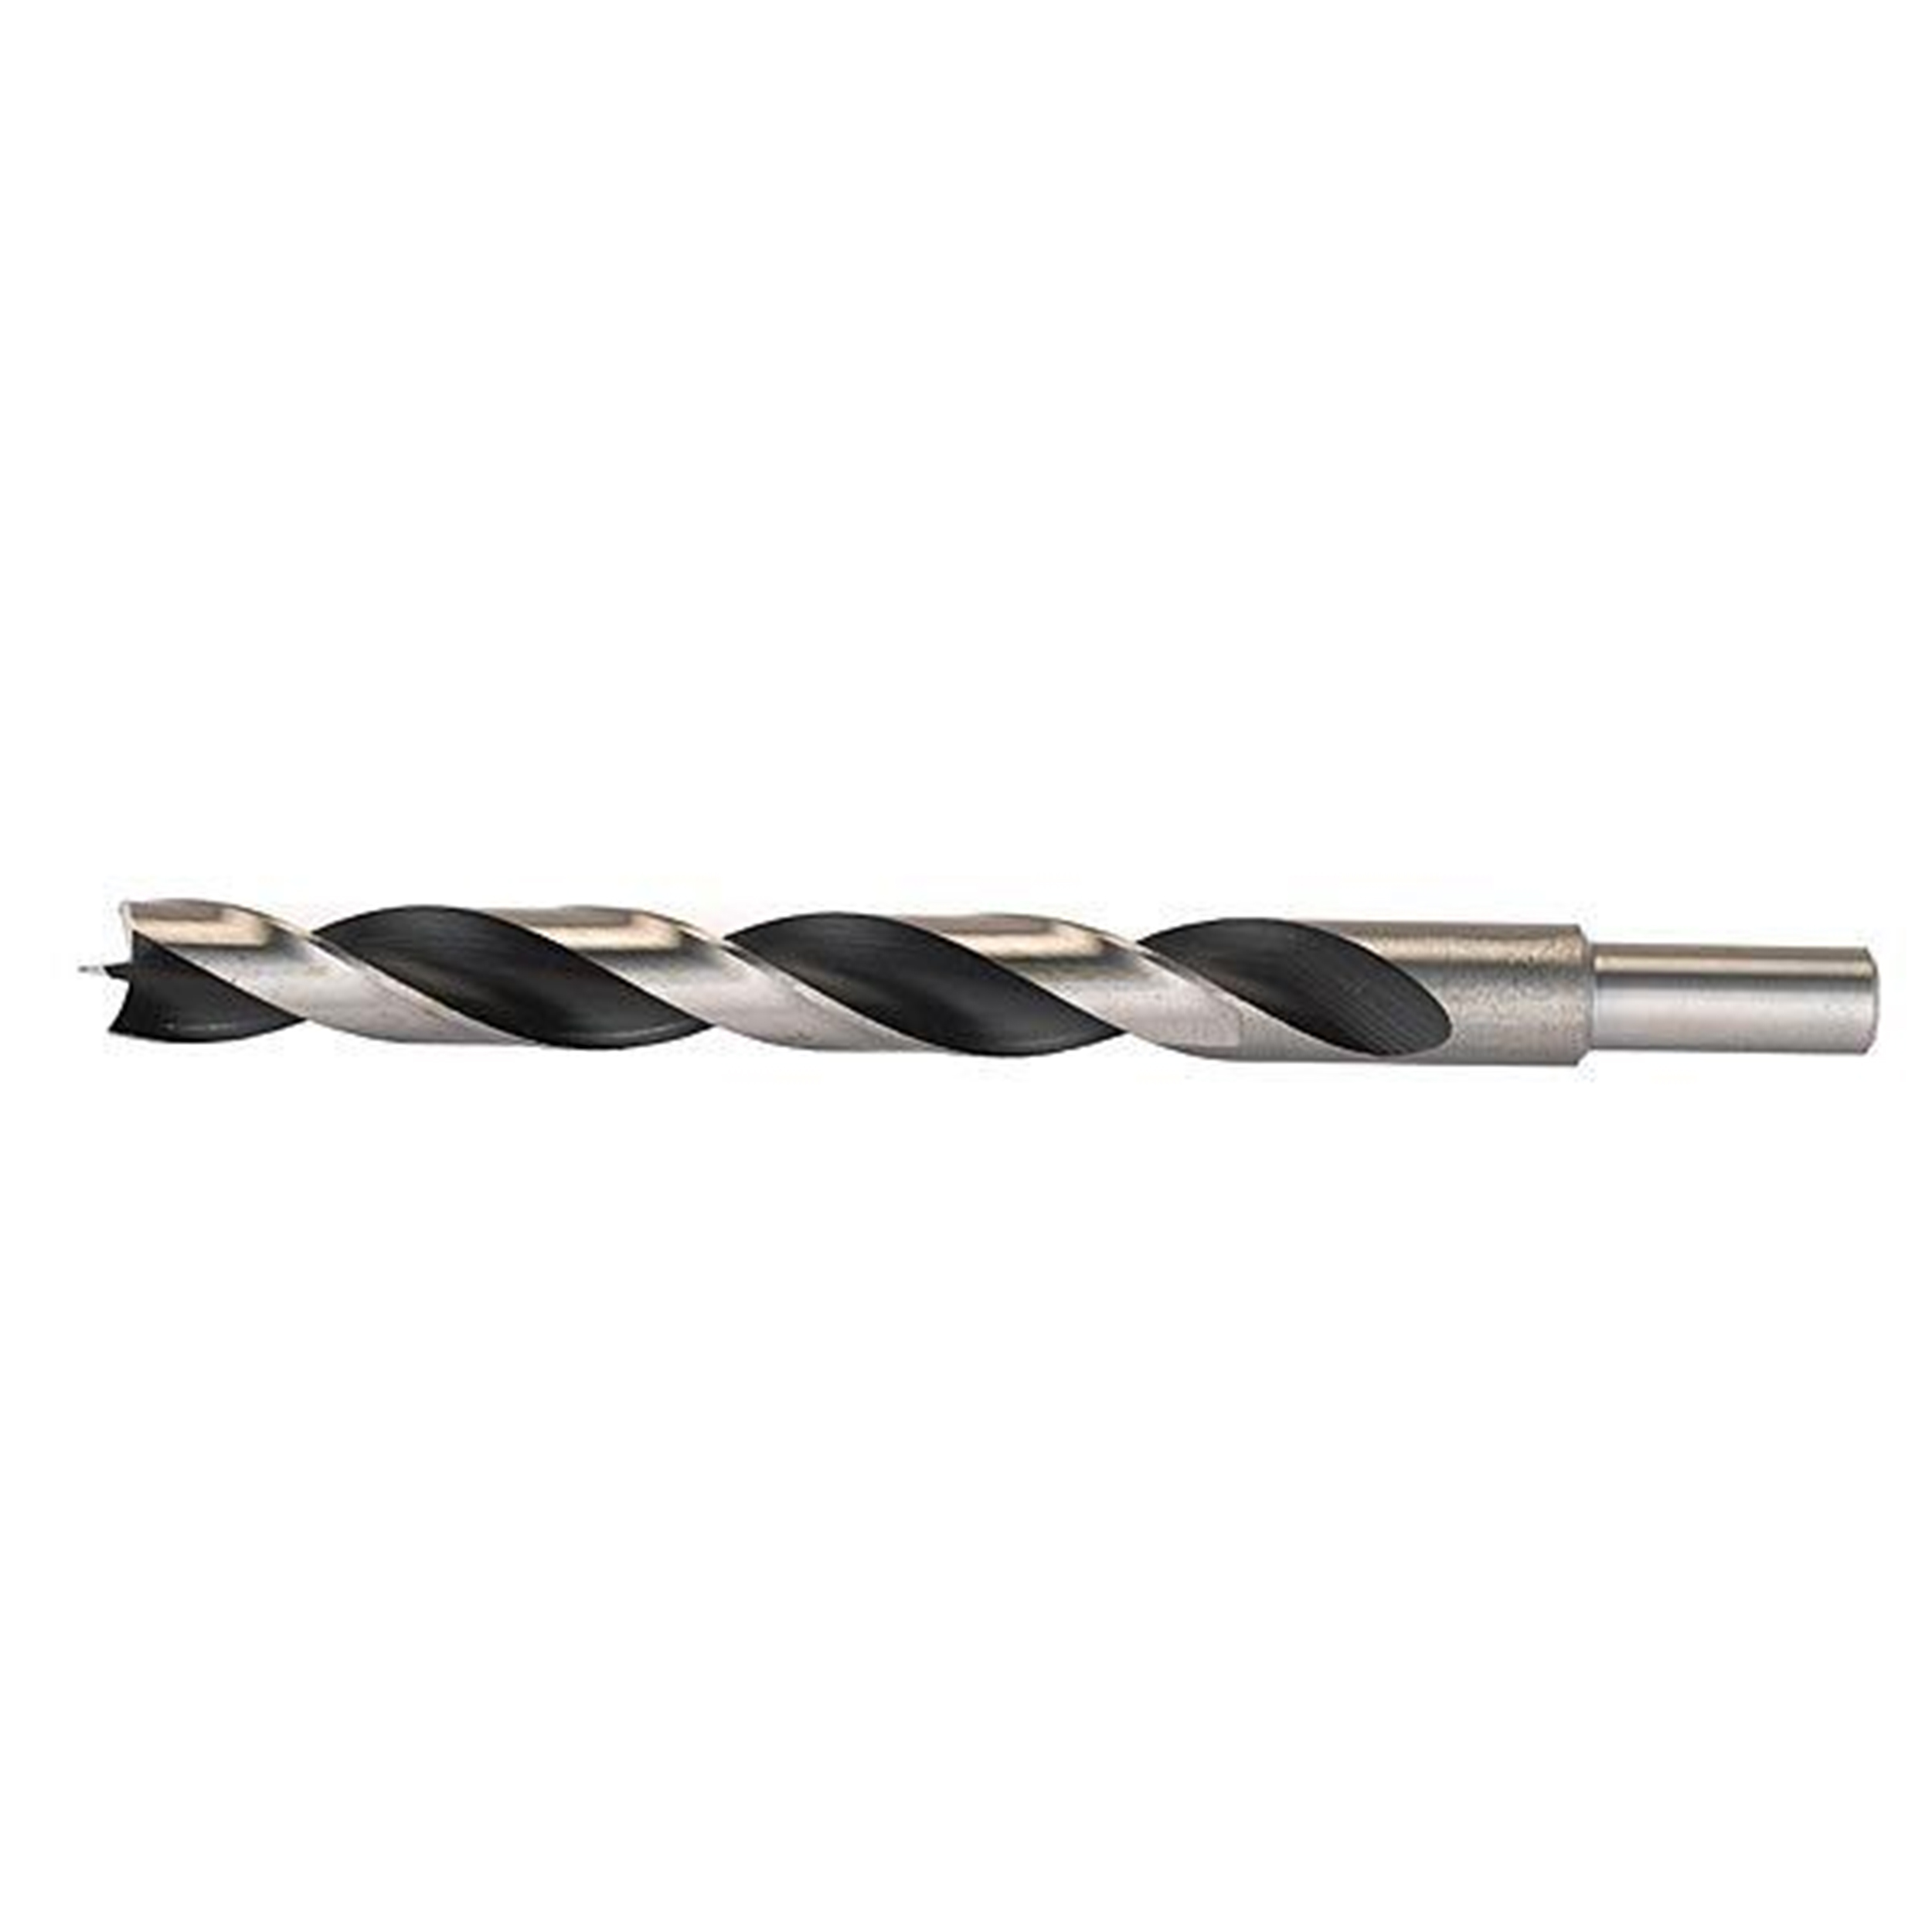 1/2-inch Chrome-vanadium Steel Brad Point Drill Bit